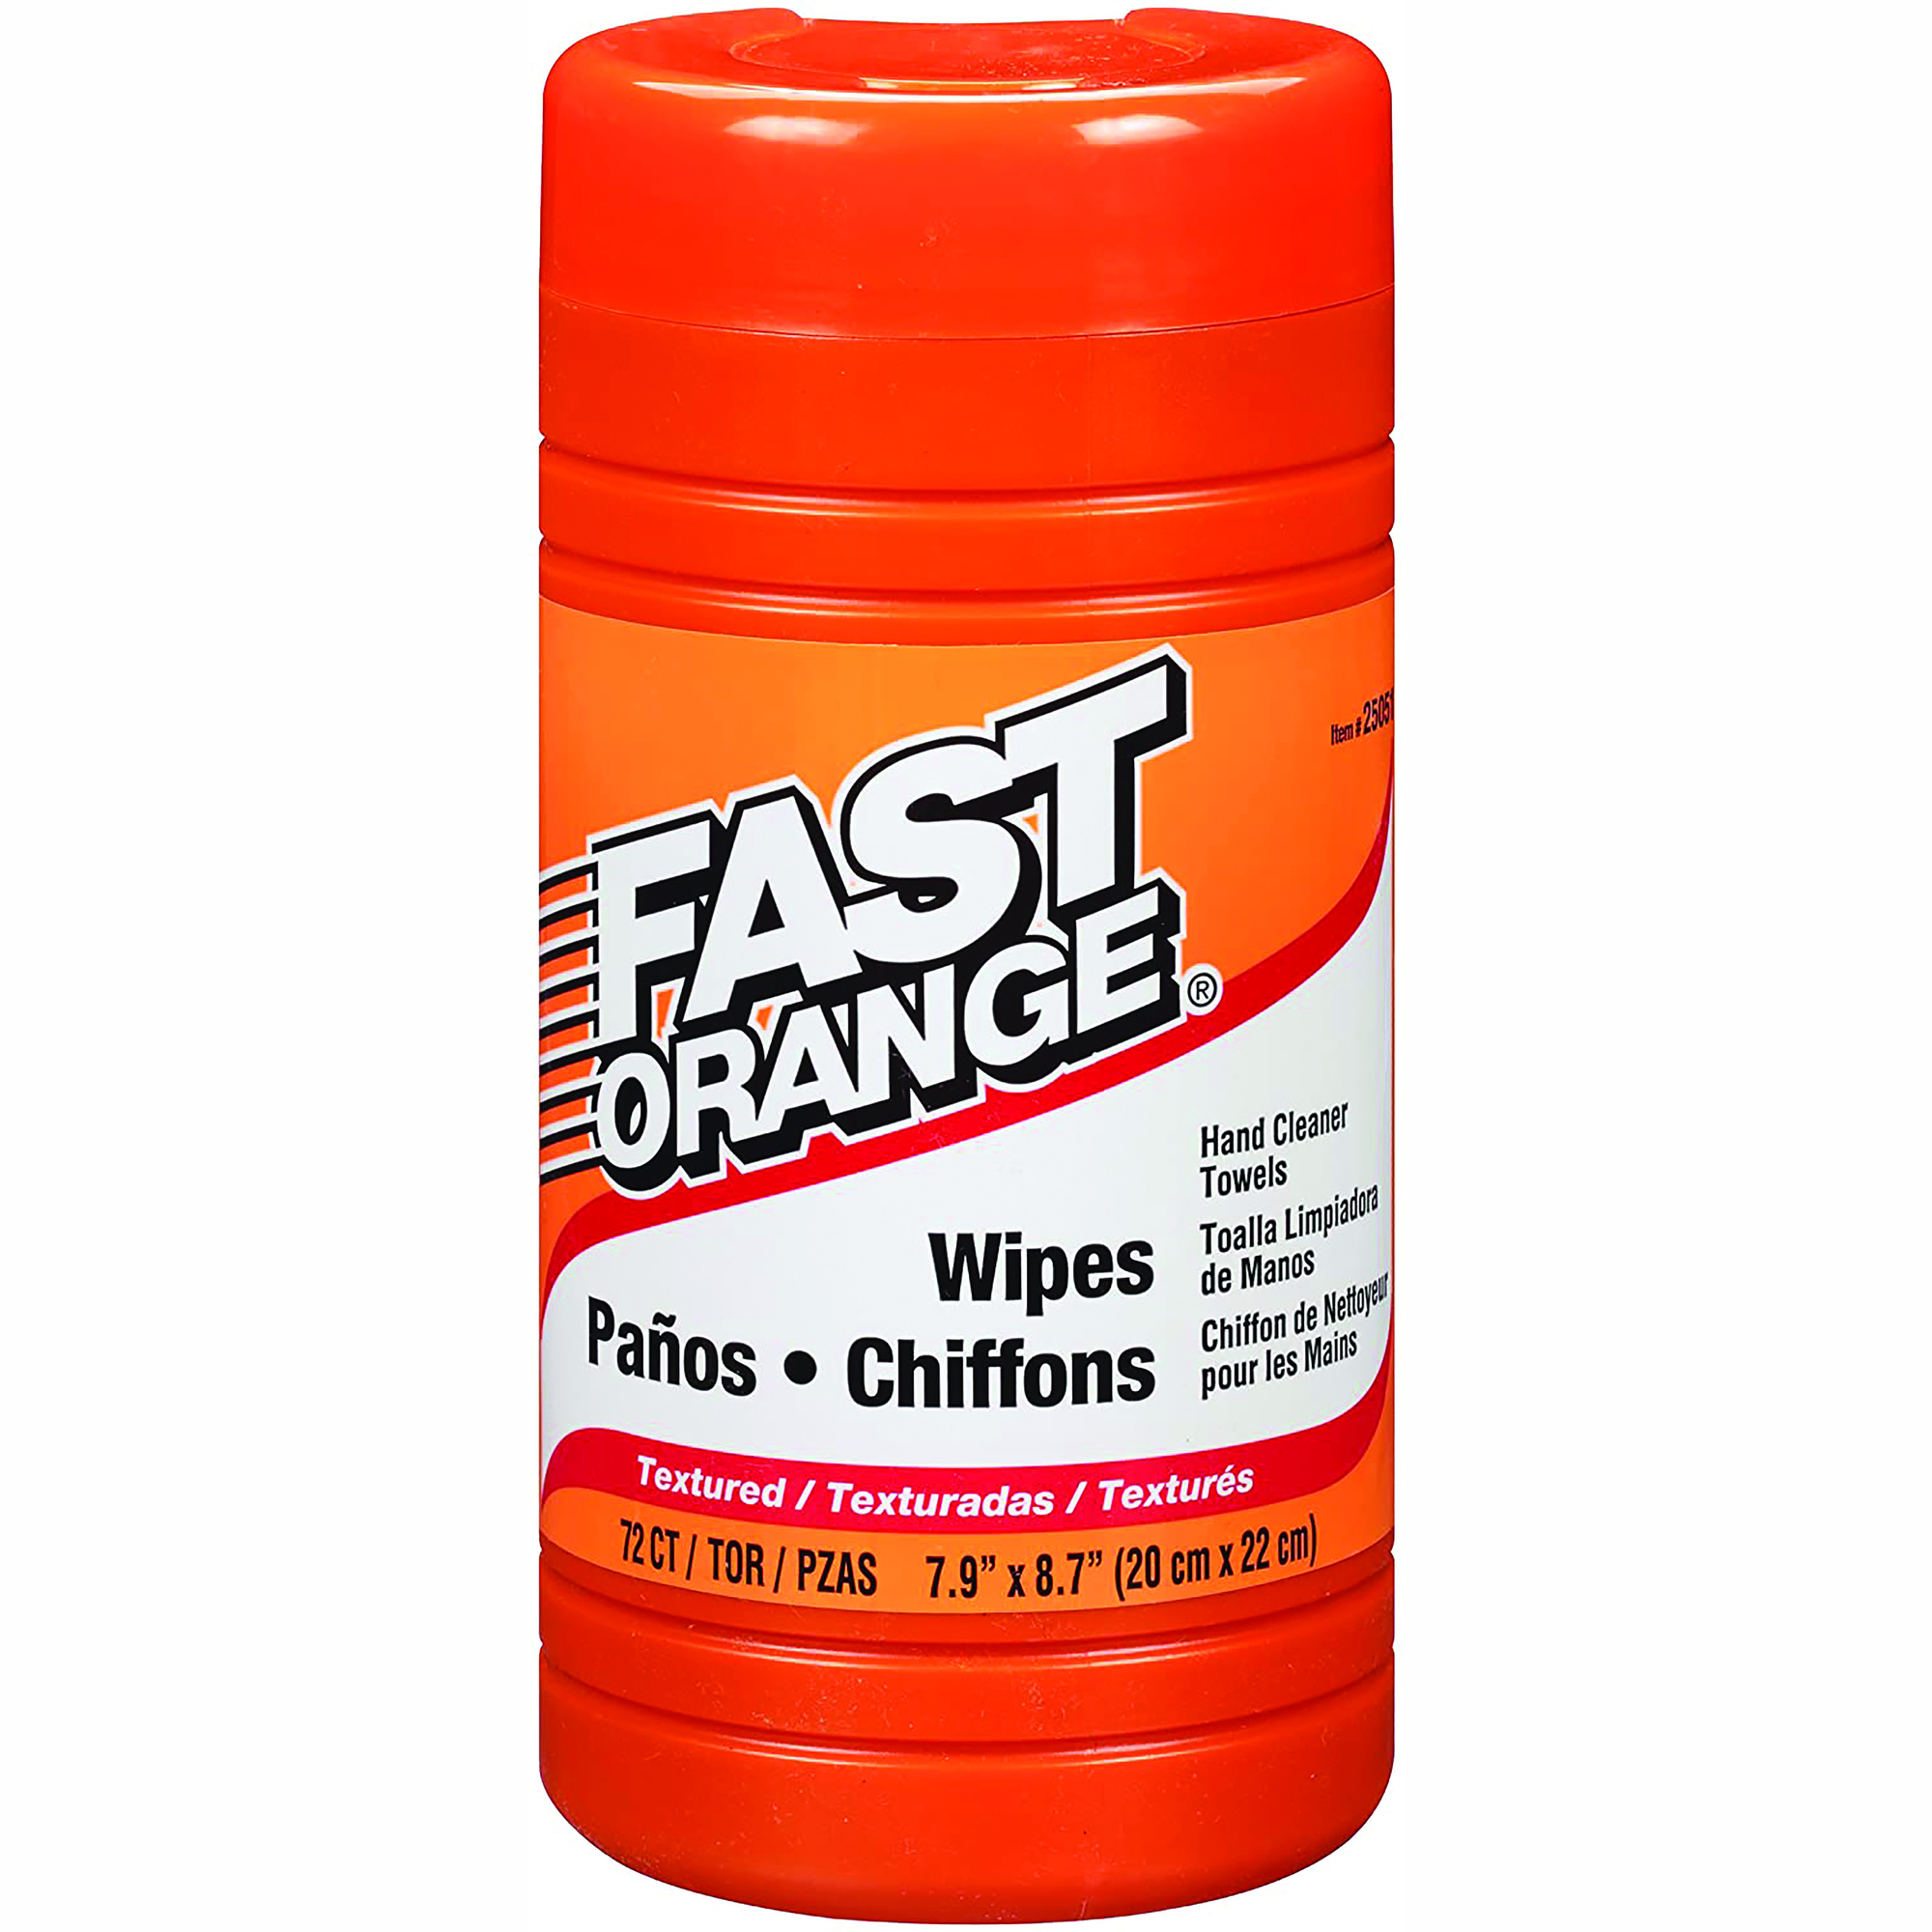 Fast Orange, Hand Cleaner Wipes 72ct, Scent Type Citrus, Model 25051